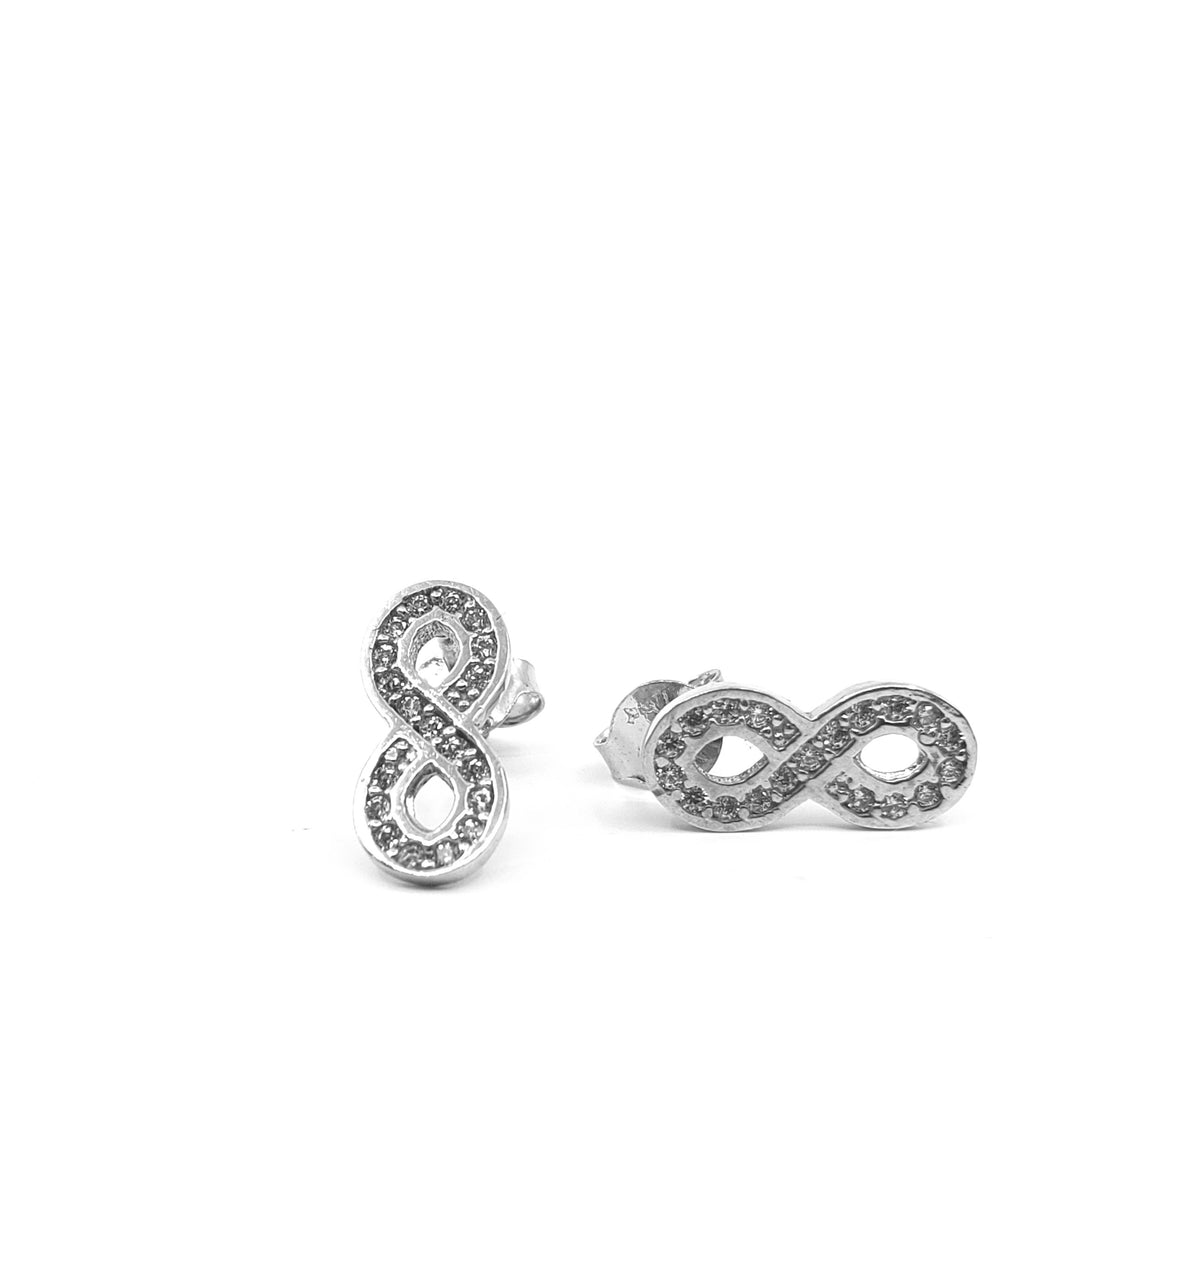 10K White Gold Cubic Zirconia Infinity Stud Earrings - 12mm x 5mm